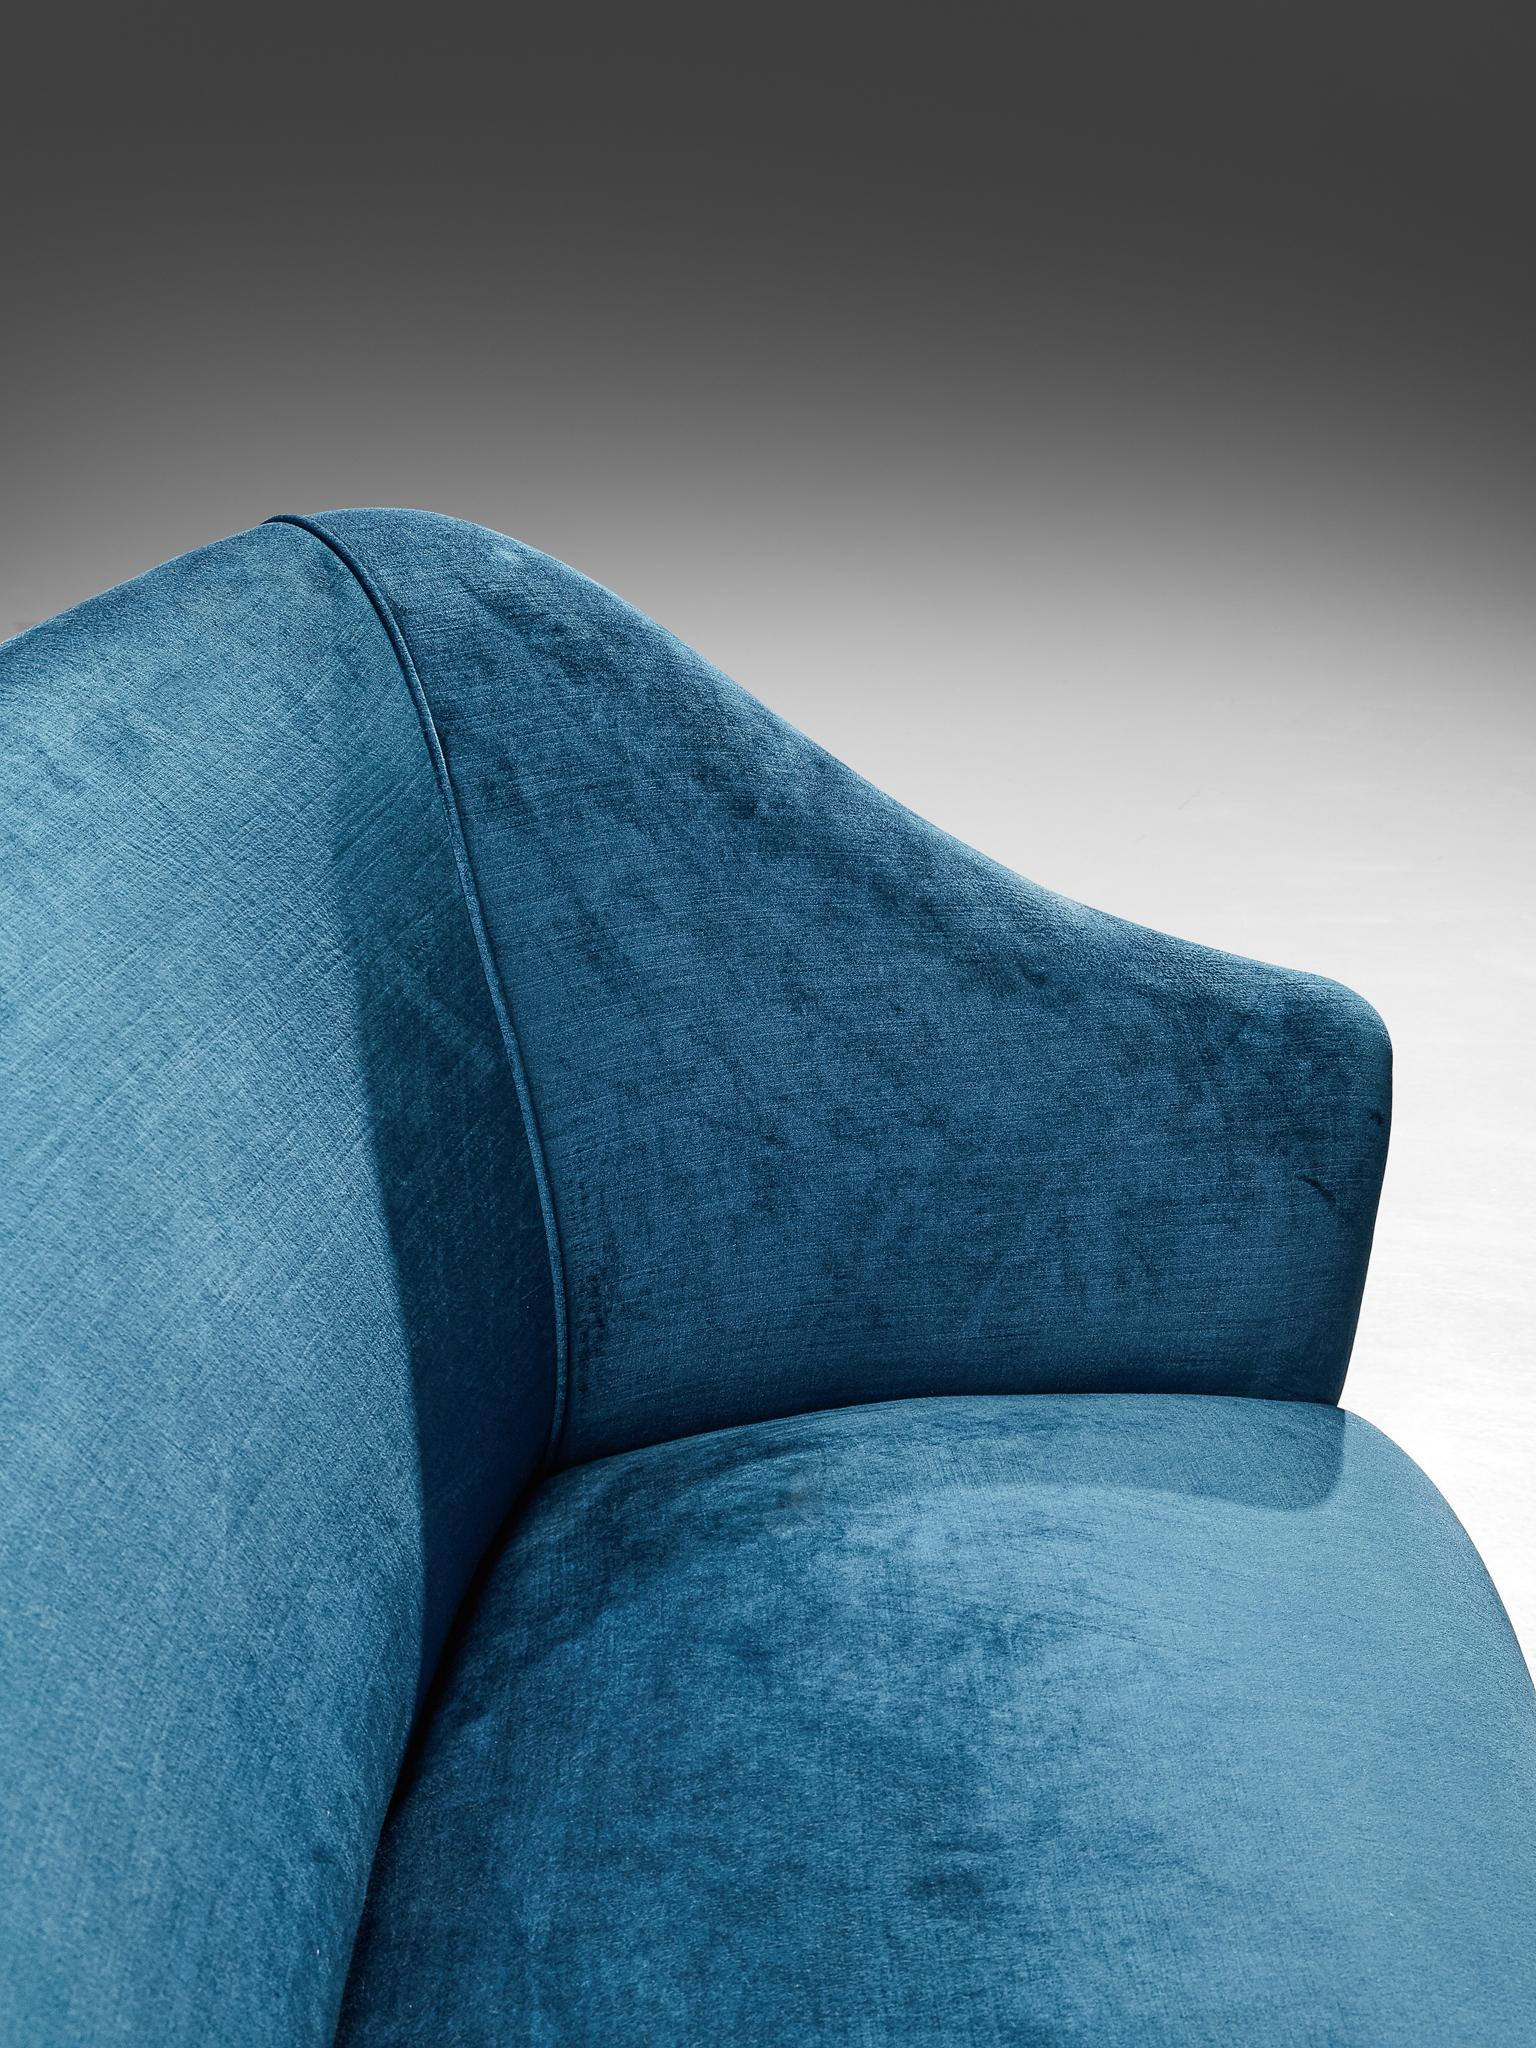 Mid-20th Century Elegant Italian Sofa in Prussian Blue Upholstery